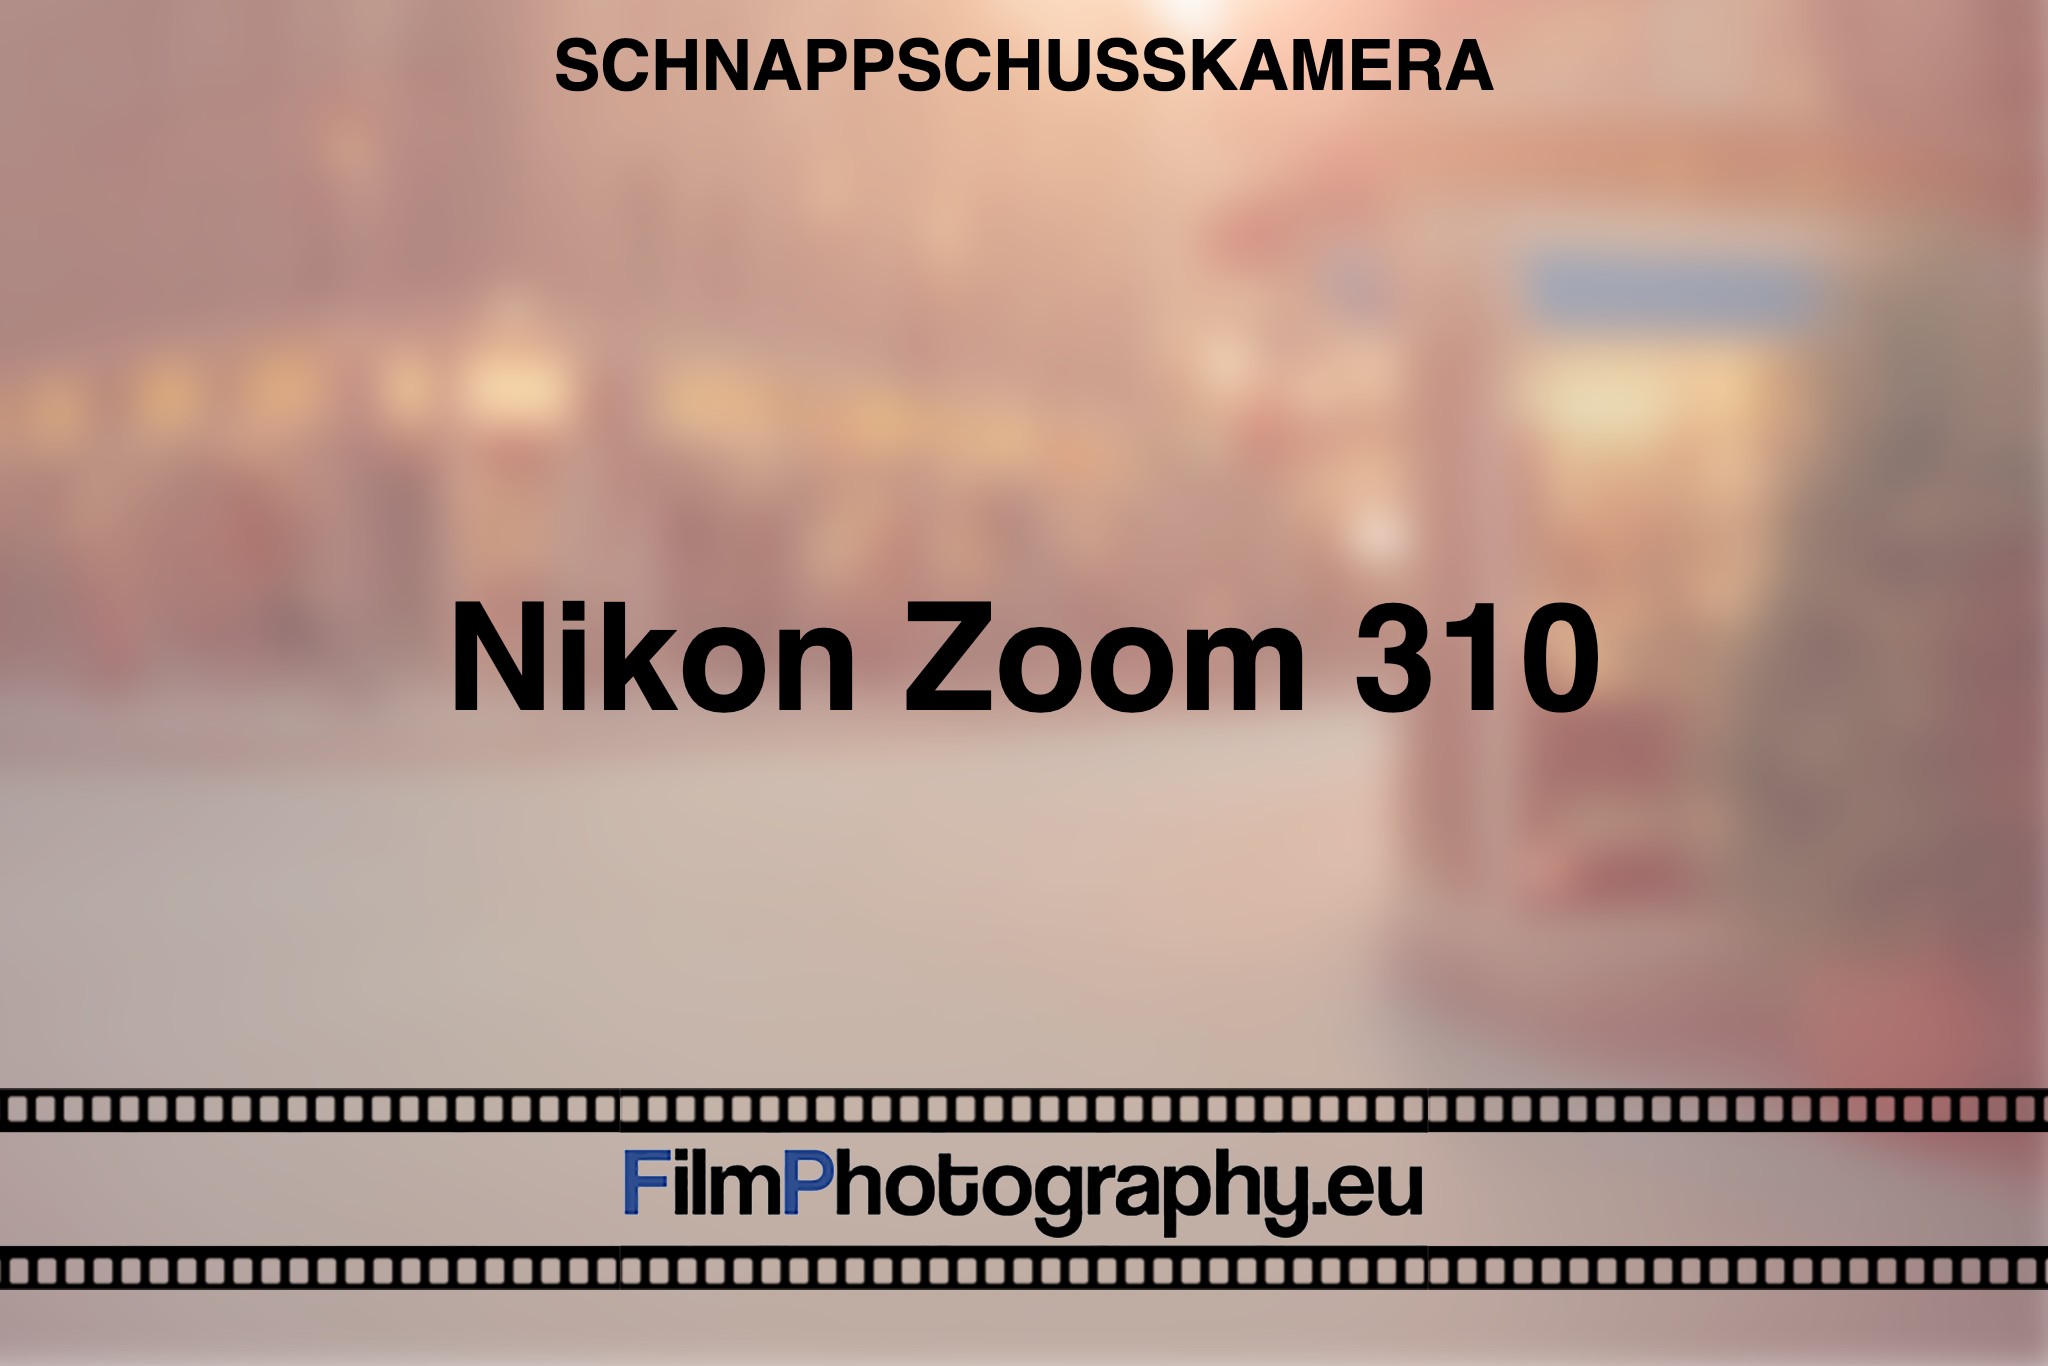 nikon-zoom-310-schnappschusskamera-bnv